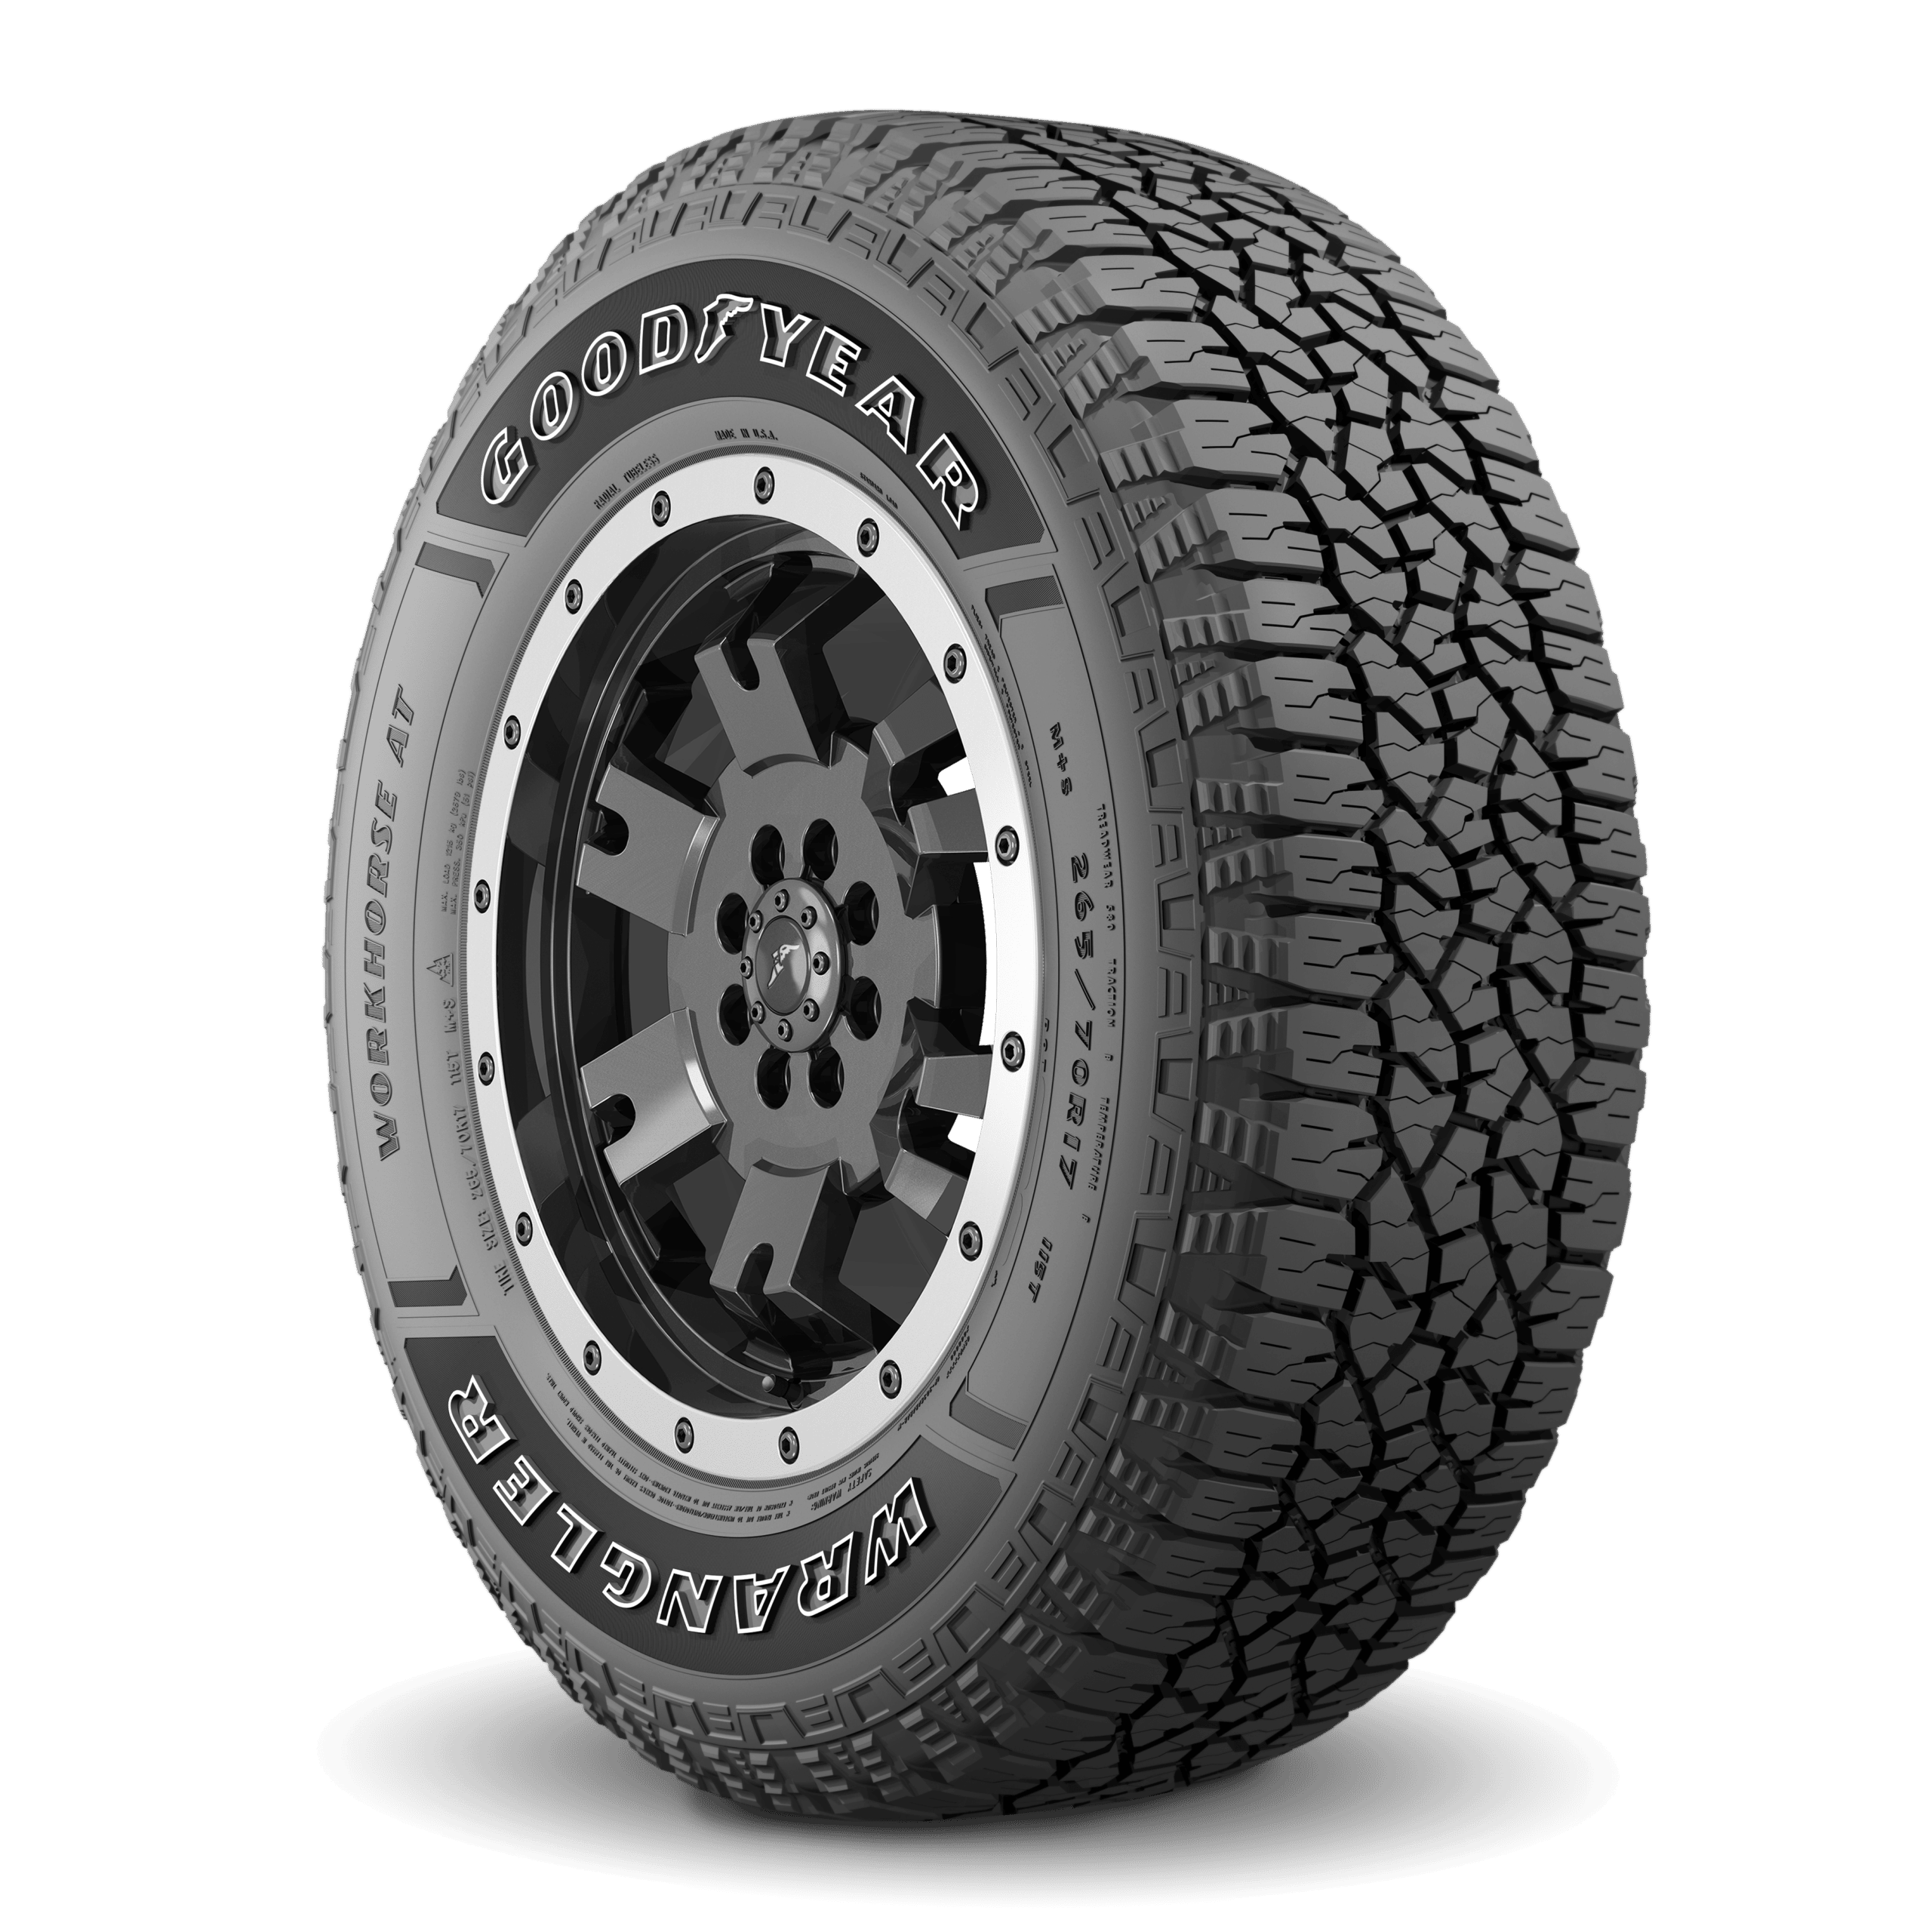 Goodyear Tires | Jensen Tire & Auto Shop Omaha